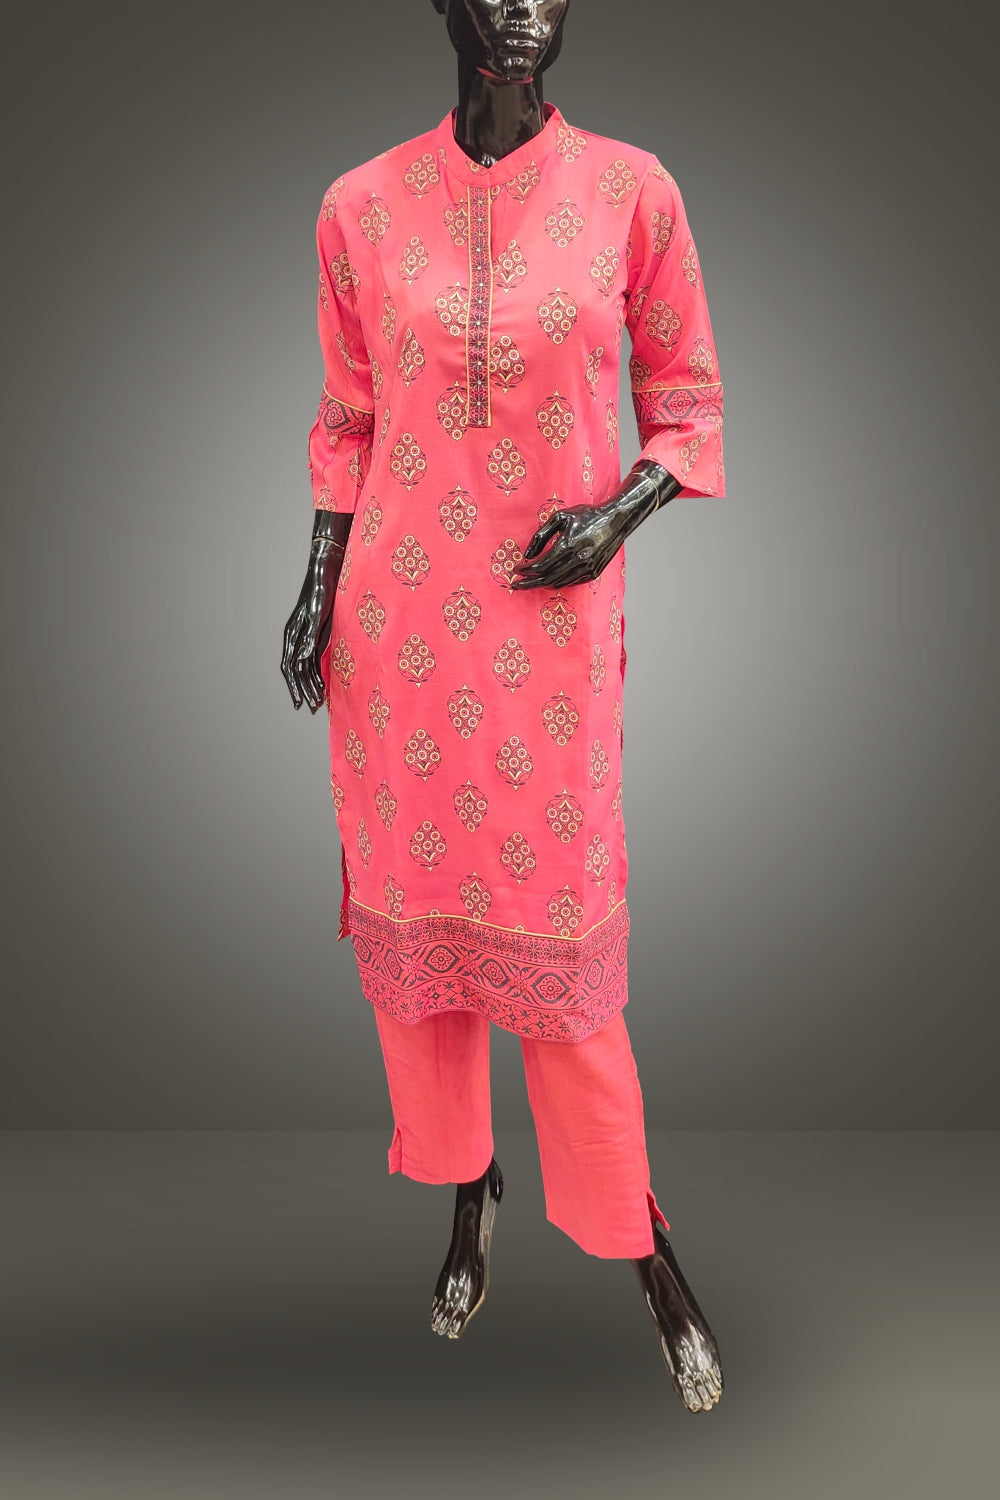 Combo of 3 Medium Size Straight Salwar Suits